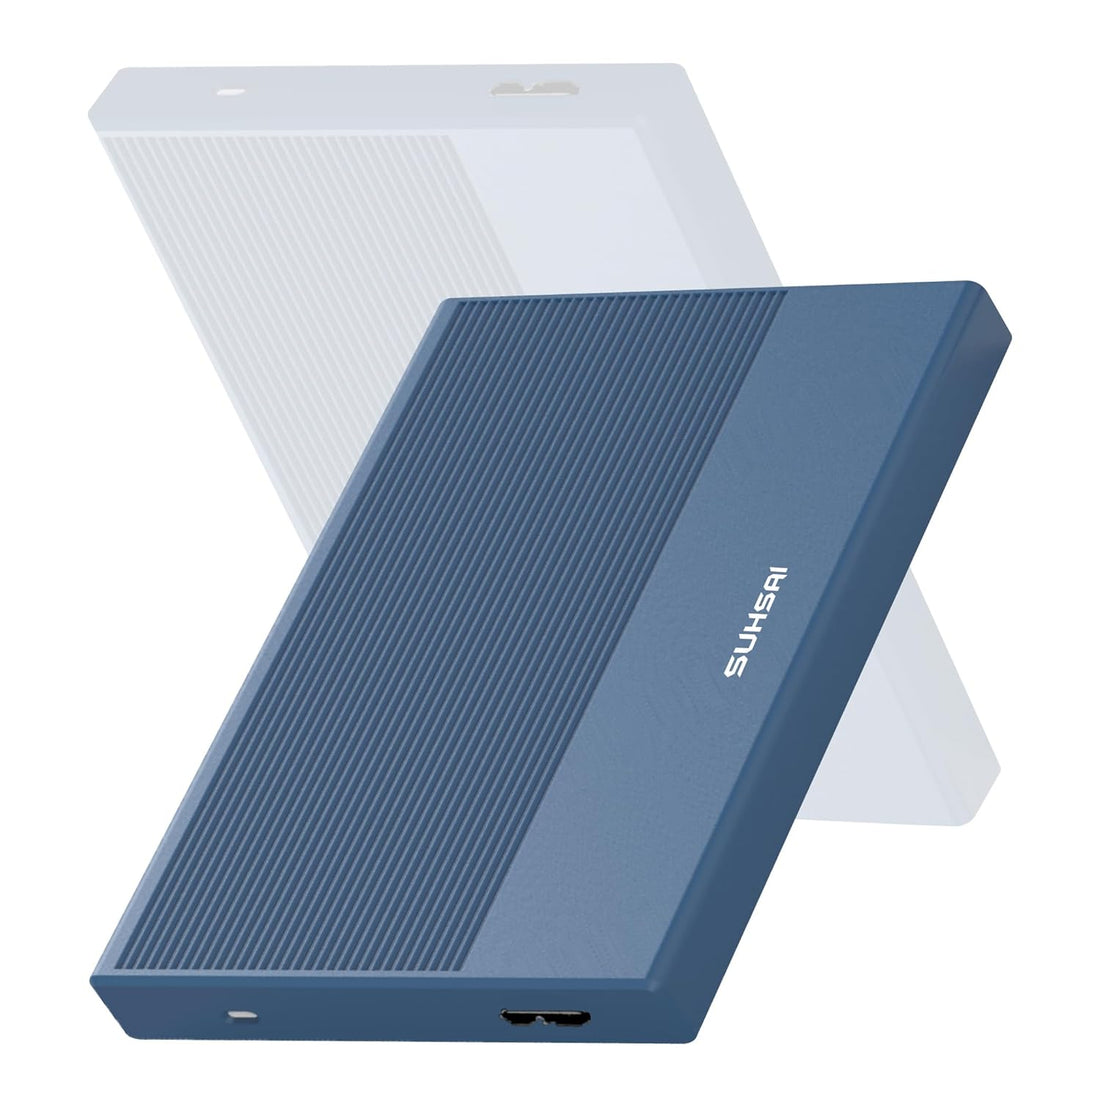 SUHSAI External Hard Drive 120GB USB 3.0 Portable Hard Disk Storage & Memory Expansion HDD, Backup External Hard Drive for Laptop Computer, MacBook, and Desktop (Navy Blue)